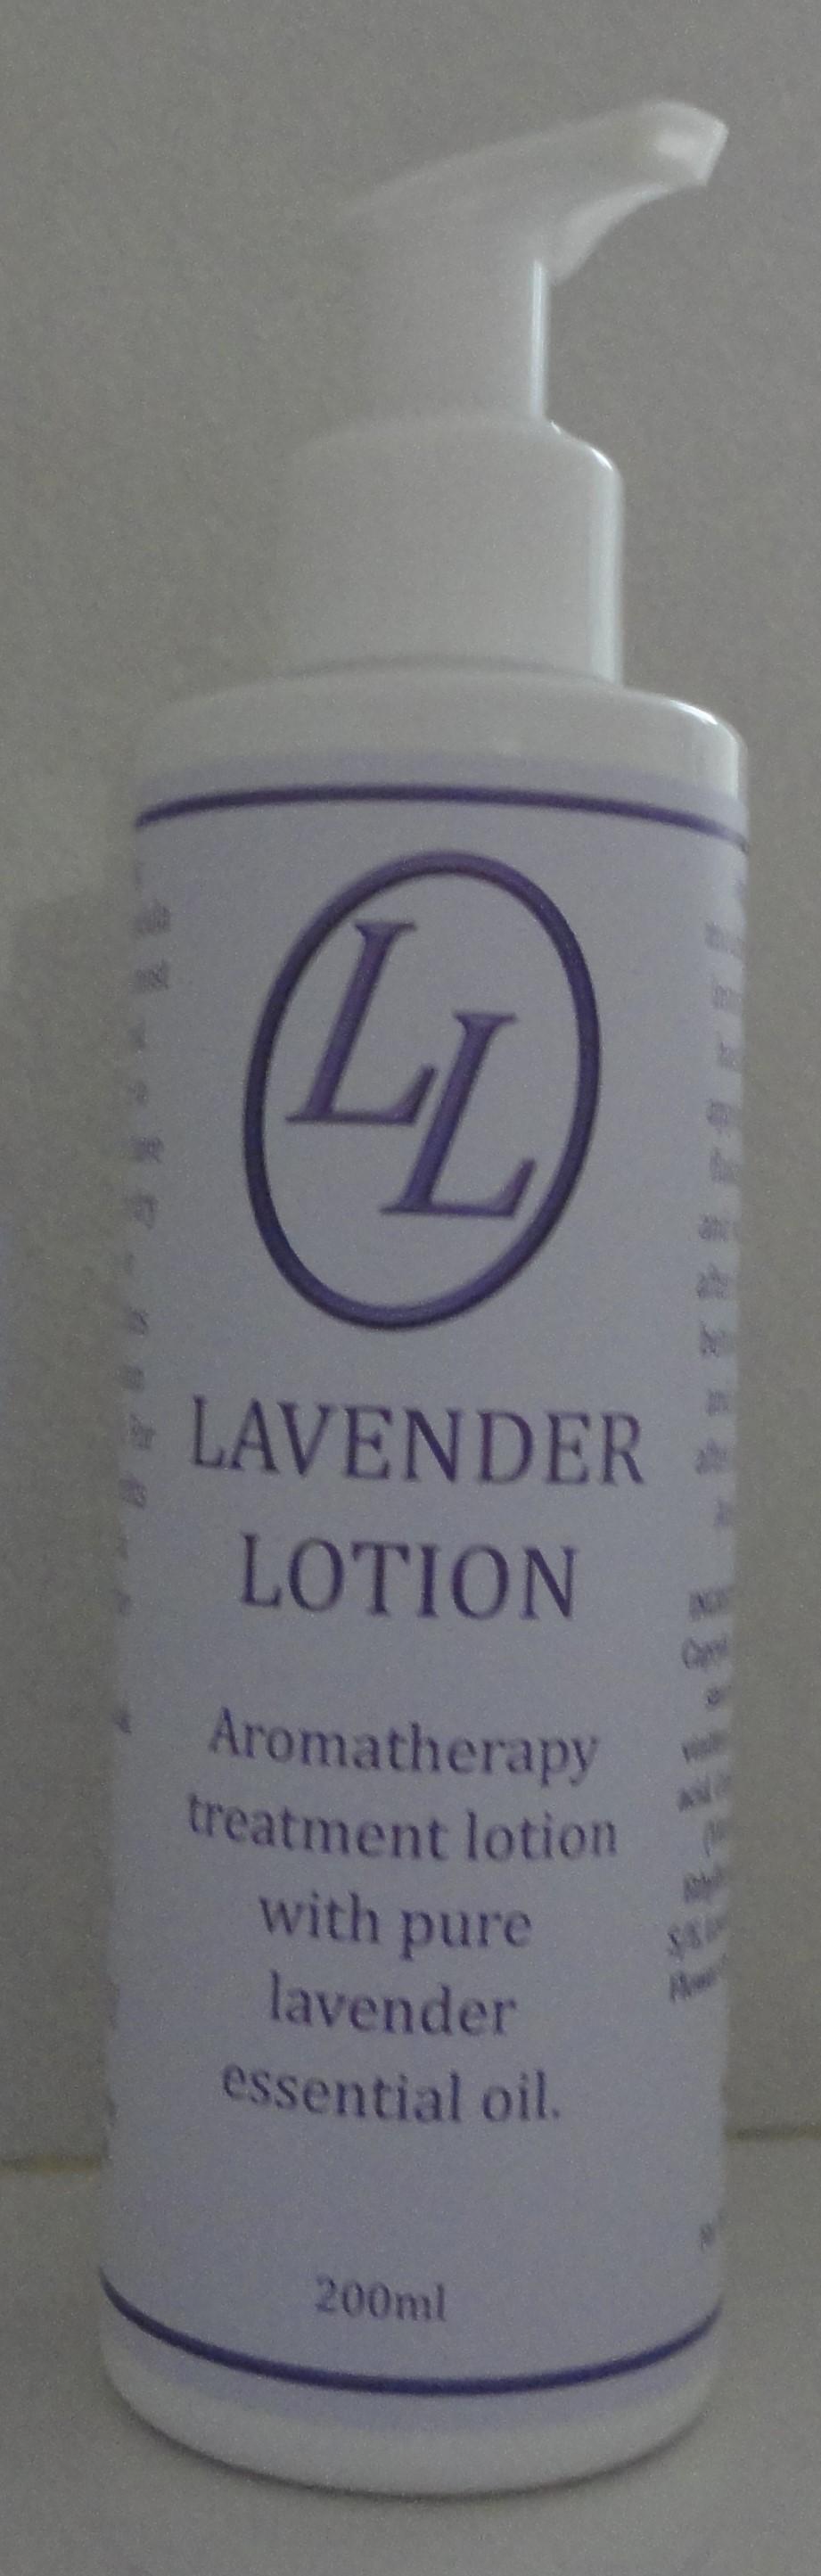 Lavender Lotion 200ml